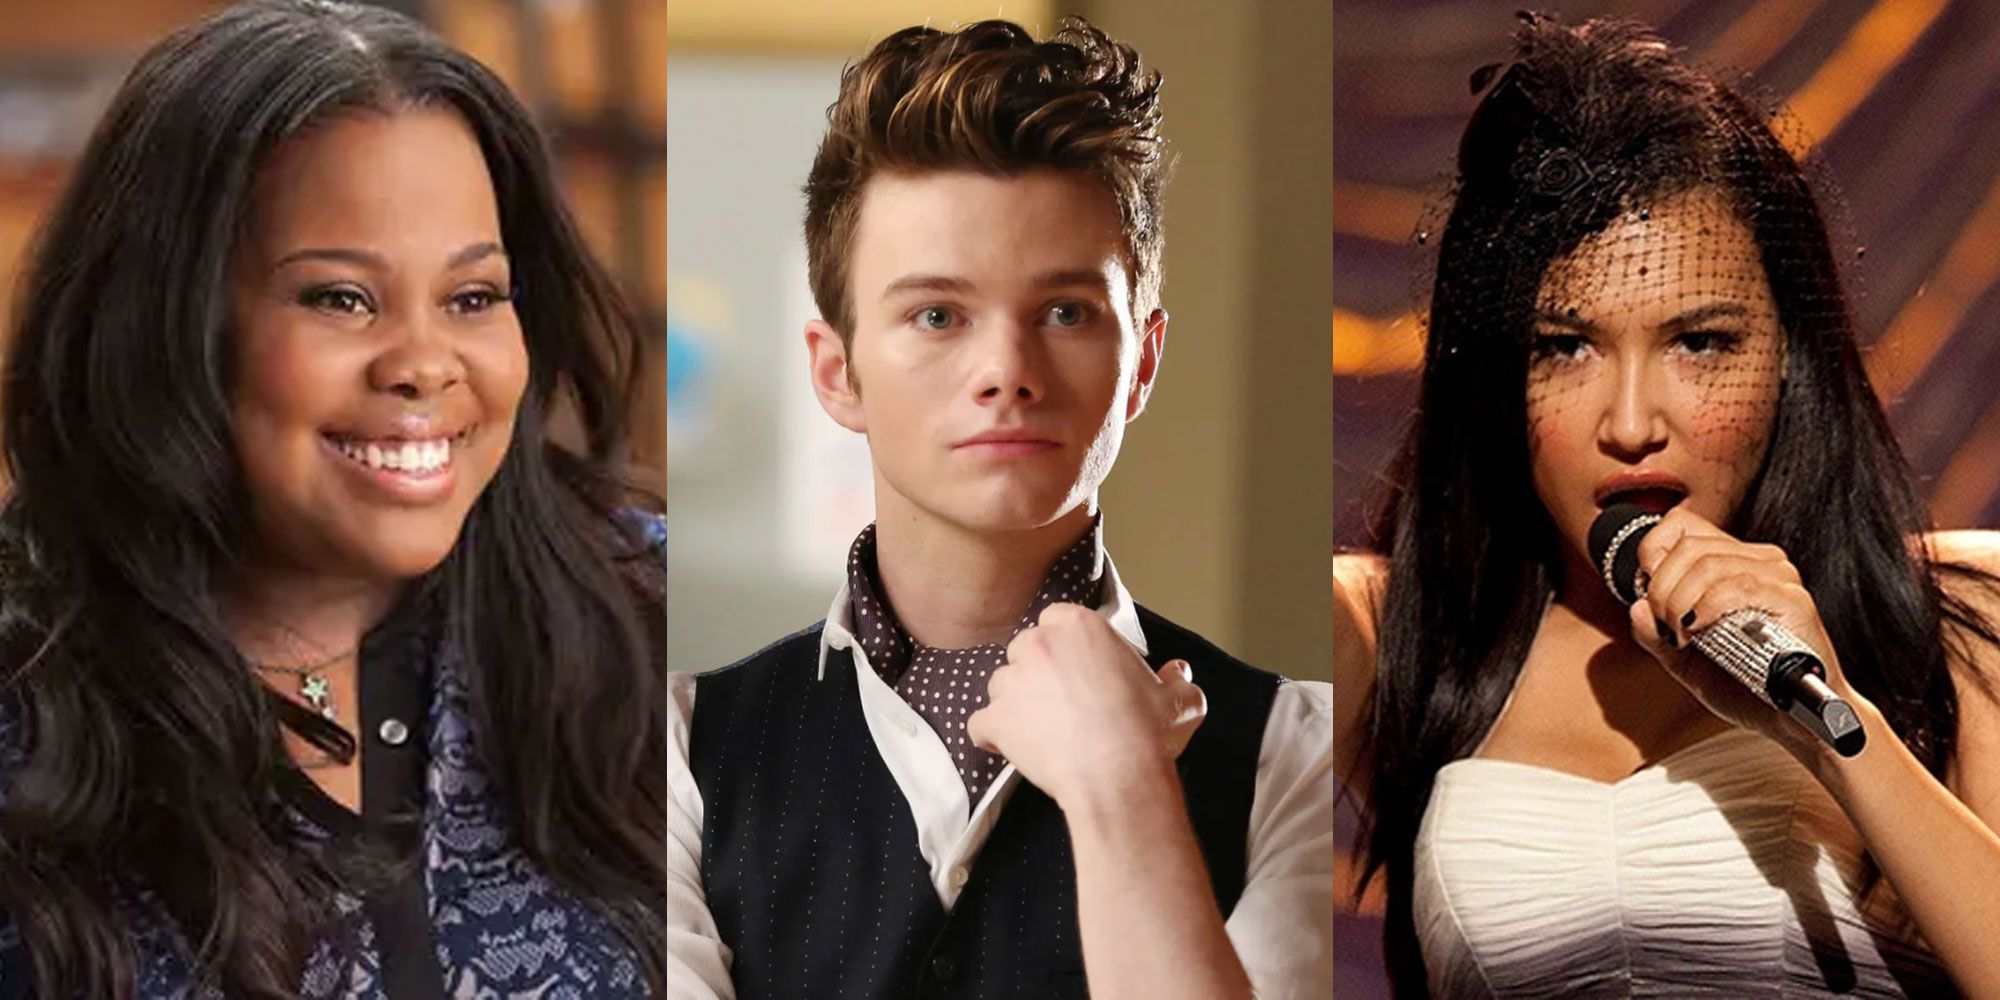 A split image features Glee characters Mercedes, Kurt, and Santana